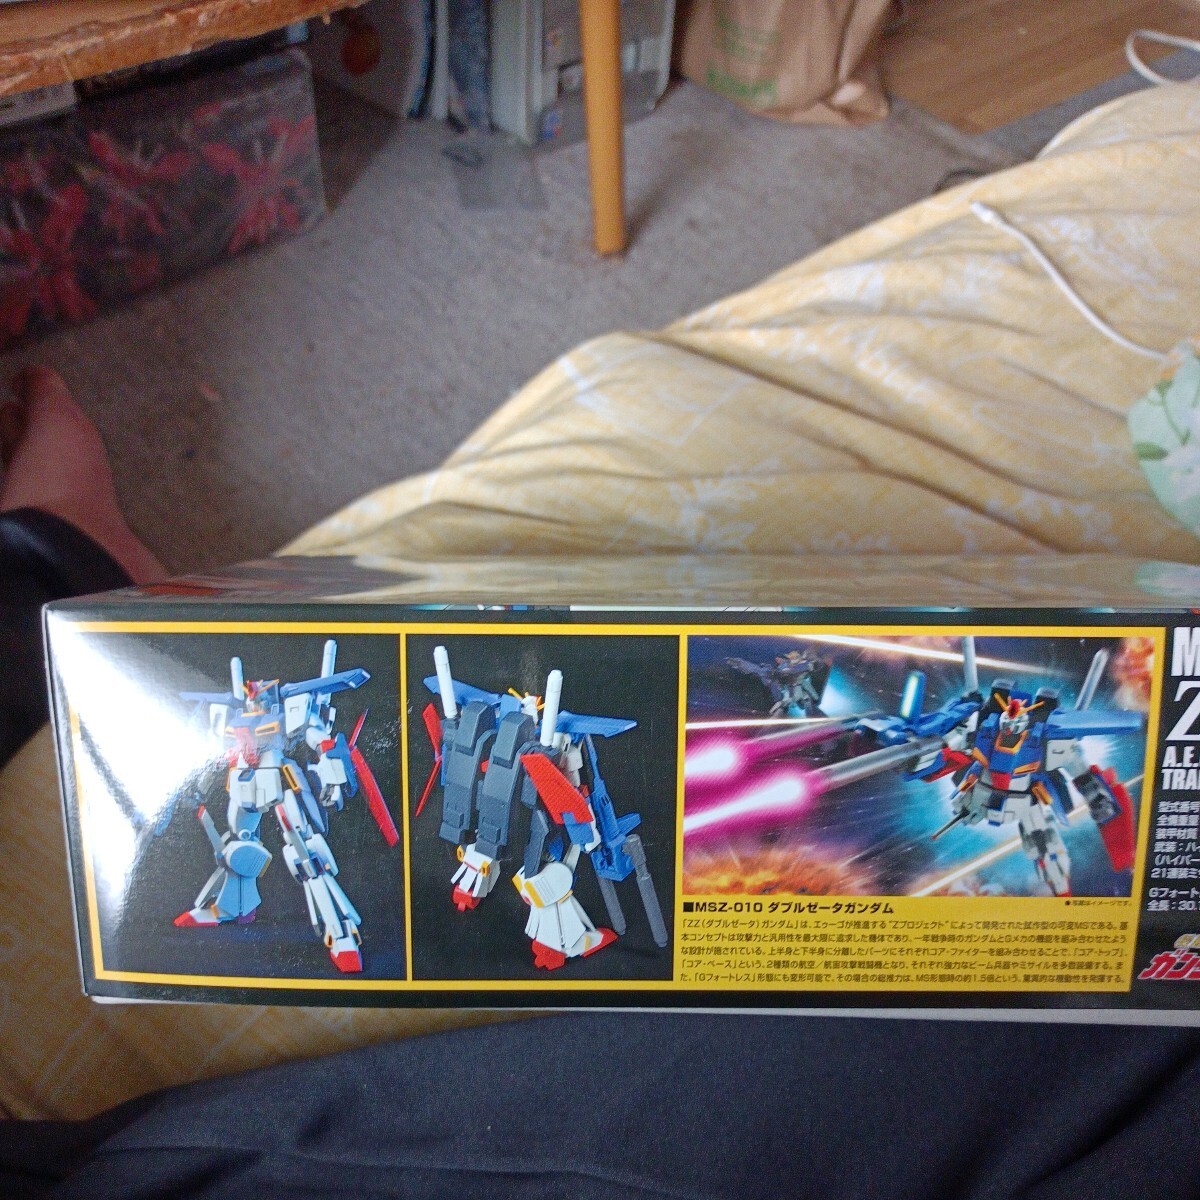 MSZ-010 double ze-ta Gundam (1/144 scale HGUC 111 Mobile Suit Gundam ZZ 2095912)